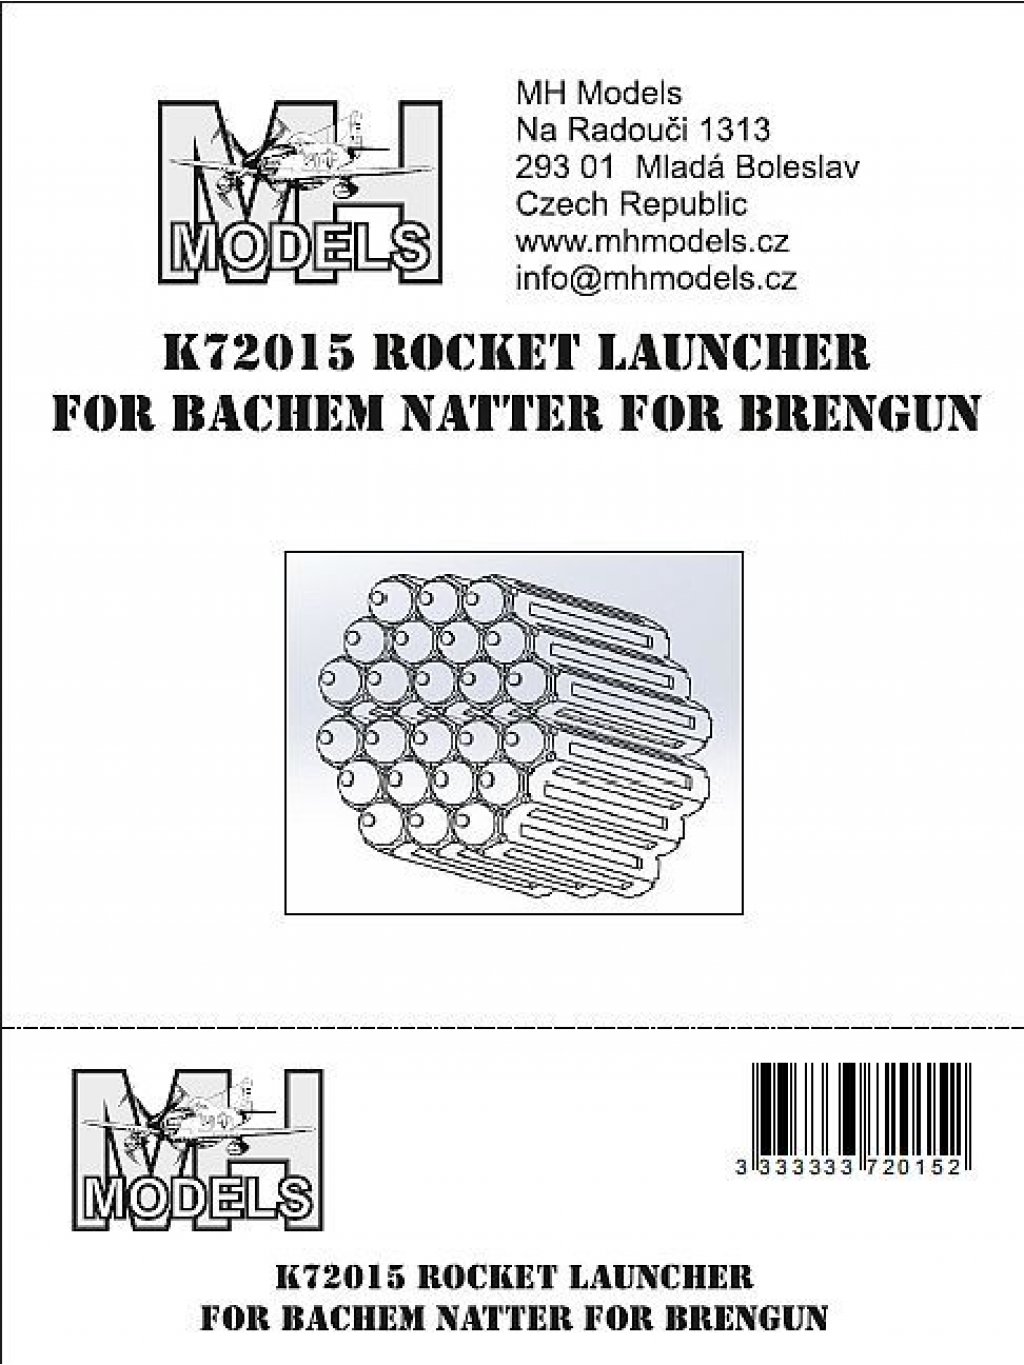 Rocket laucher with rockets for Bachem Natter for Brengun